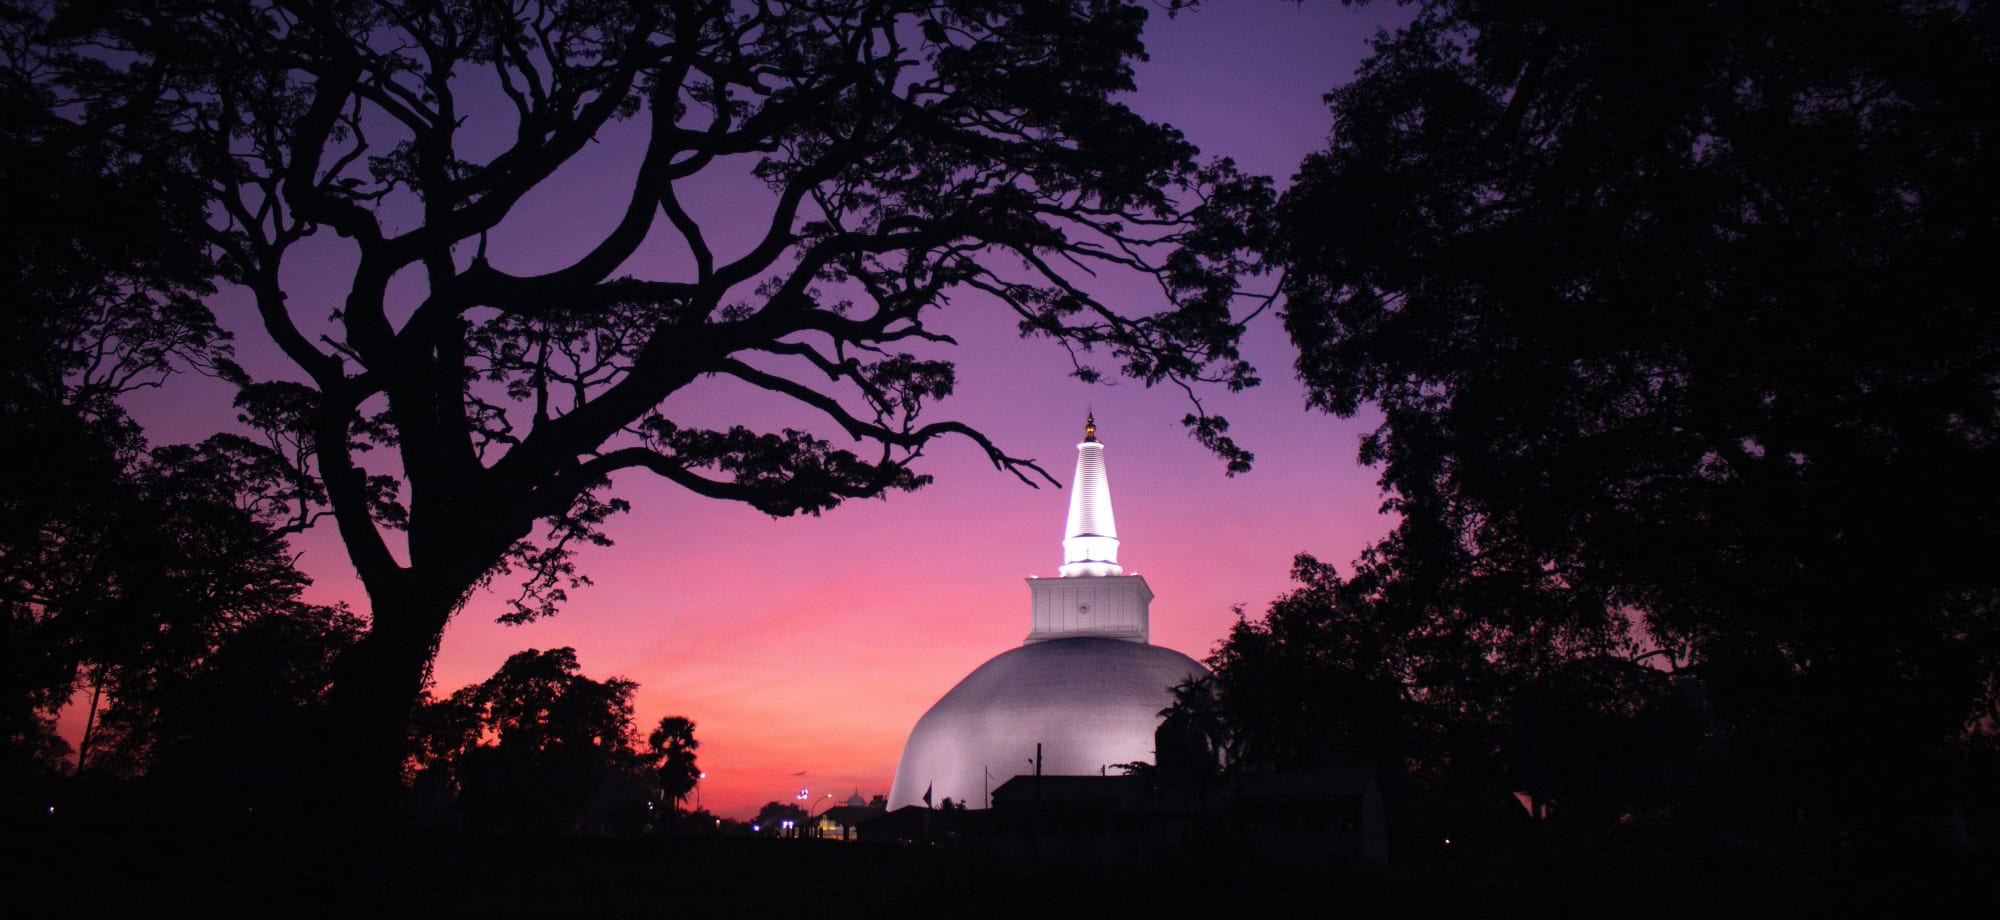 Anuradhapura_Free_Stock_Image_Pexels_CCChathura_Anuradha_Subasinghe_rpmezb-1